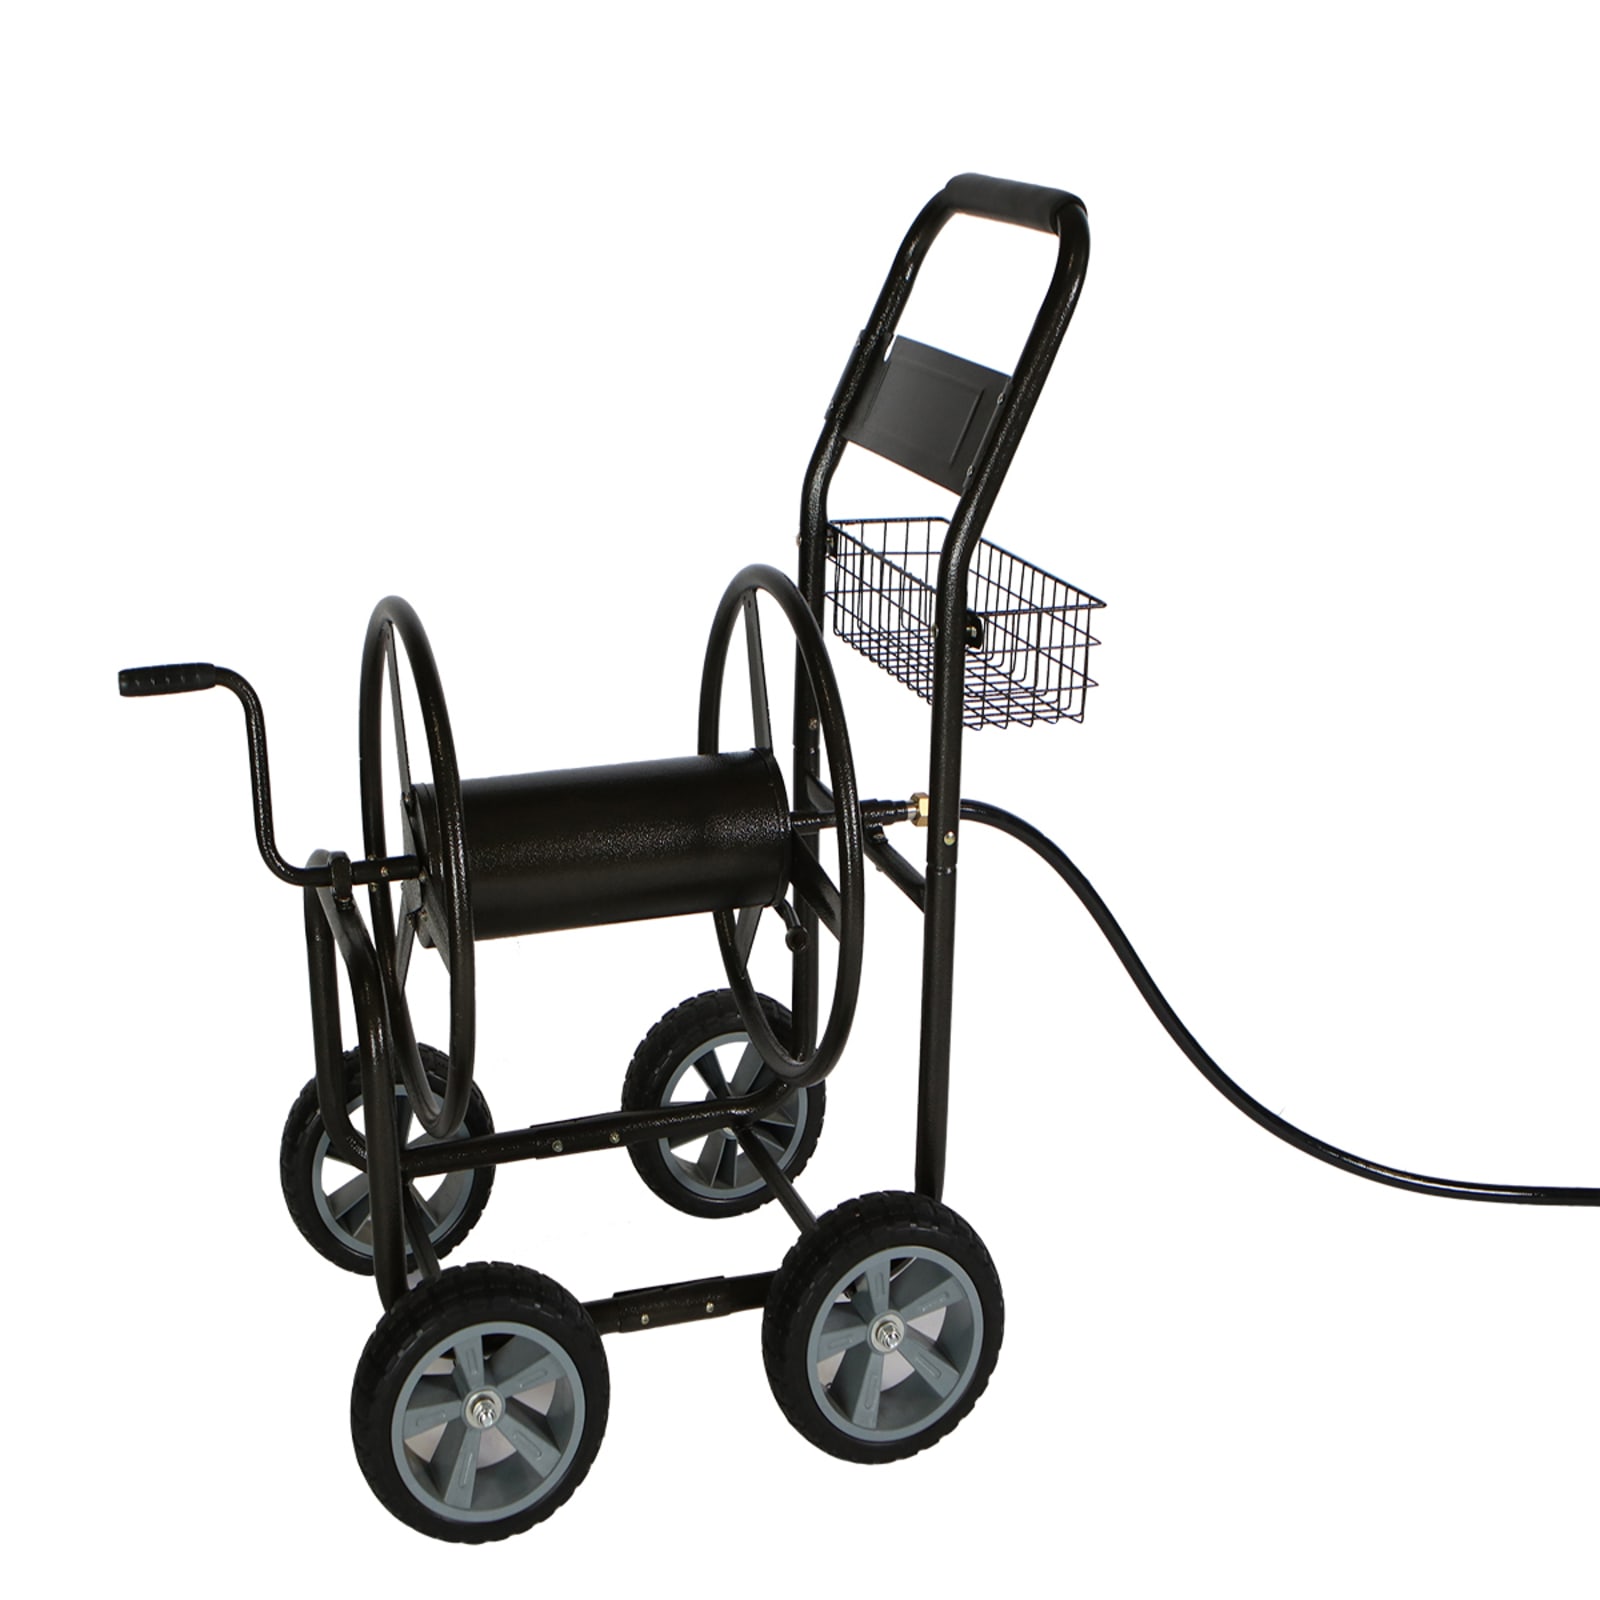 4-Wheel Industrial Hose Reel Cart with No-Flat Wheels, 400Ft Hose